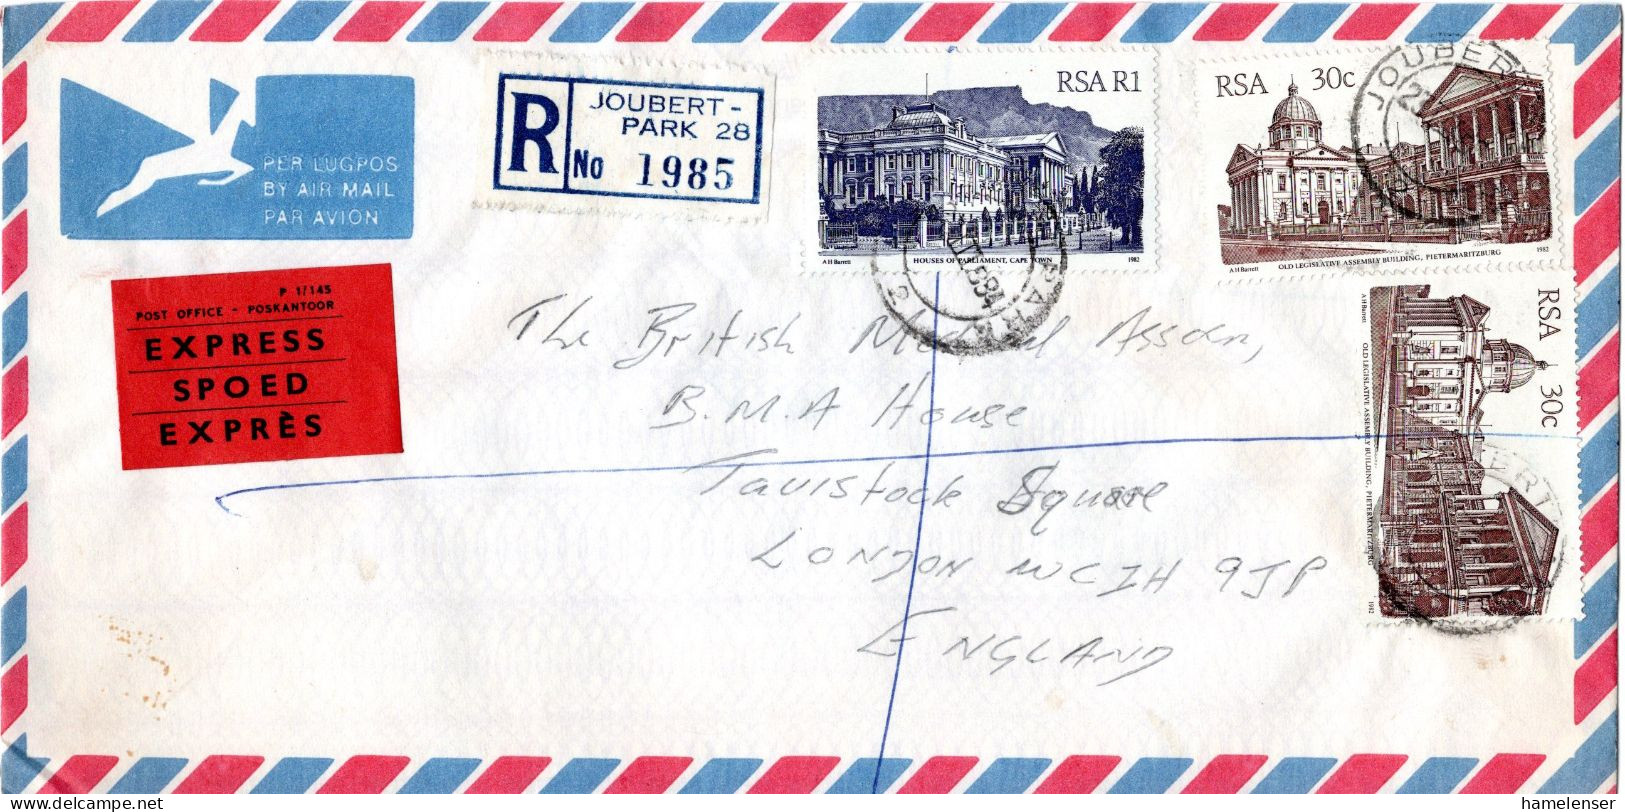 L76696 - Südafrika - 1984 - R1 Parlament MiF A R-EilLpBf JOUBERT PARK -> JOHANNESBURG -> Grossbritannien - Storia Postale